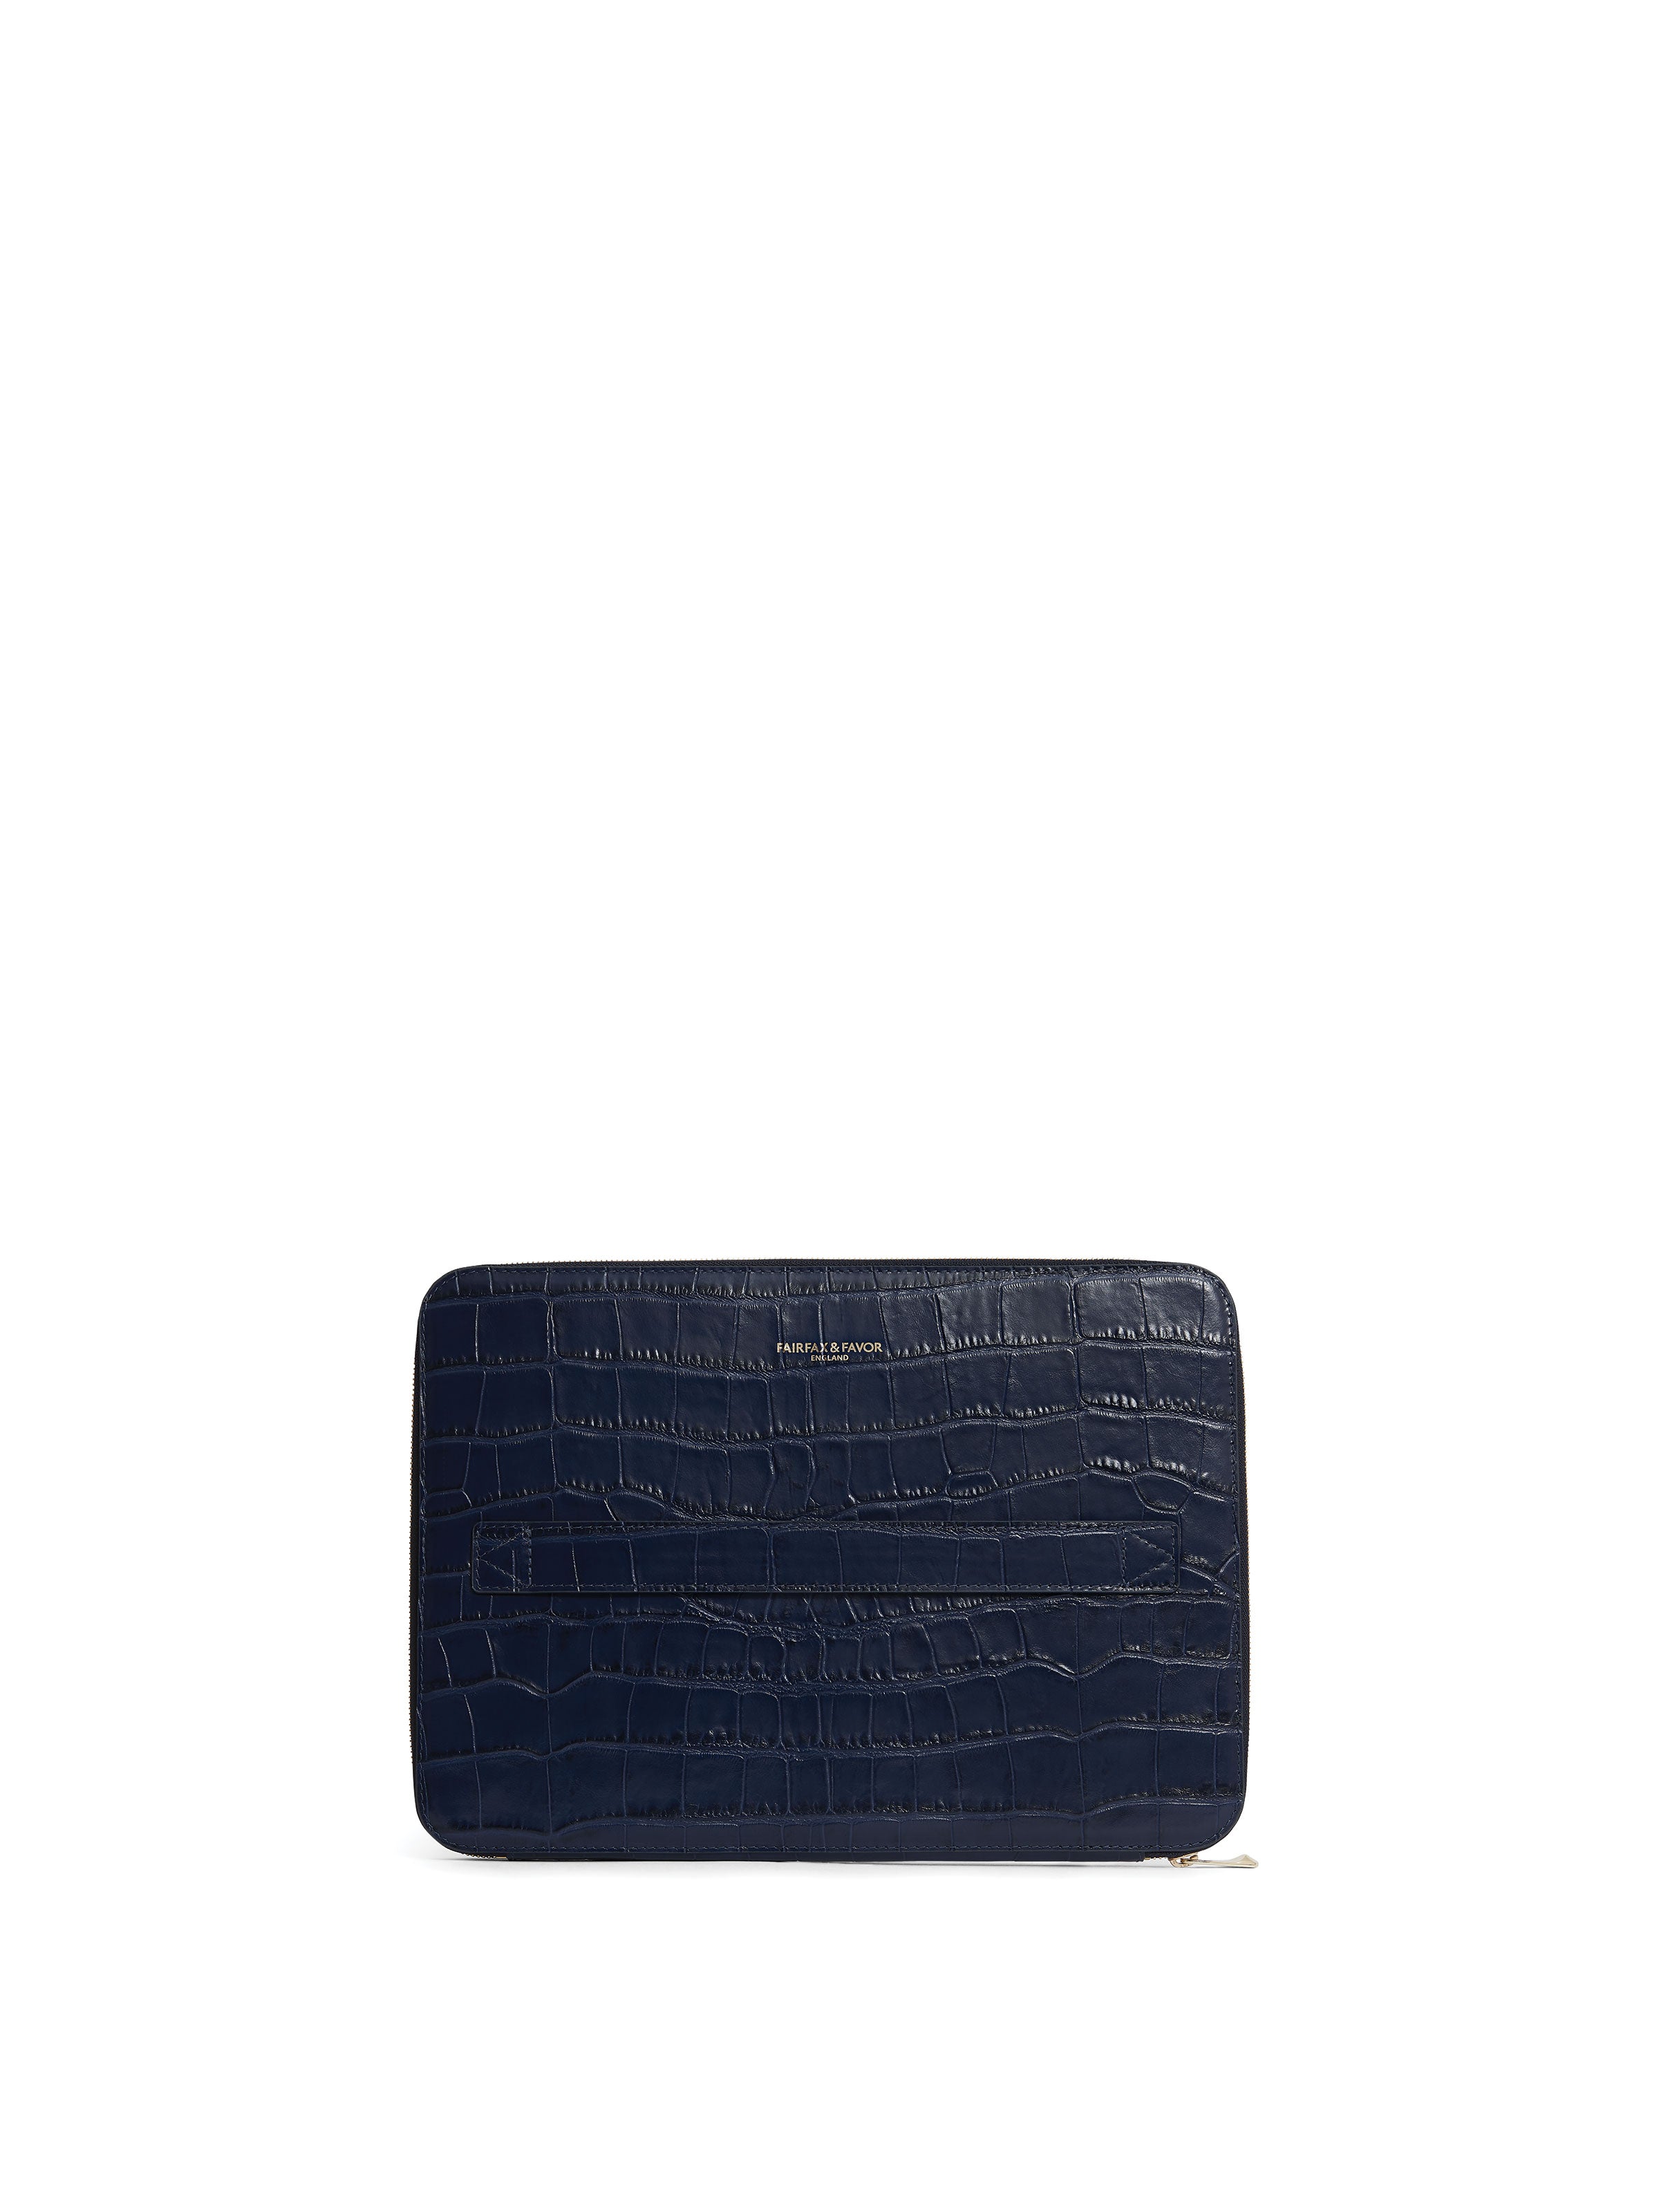 Moorgate - Unisex Folio Bag - Navy Croc Leather | Fairfax & Favor